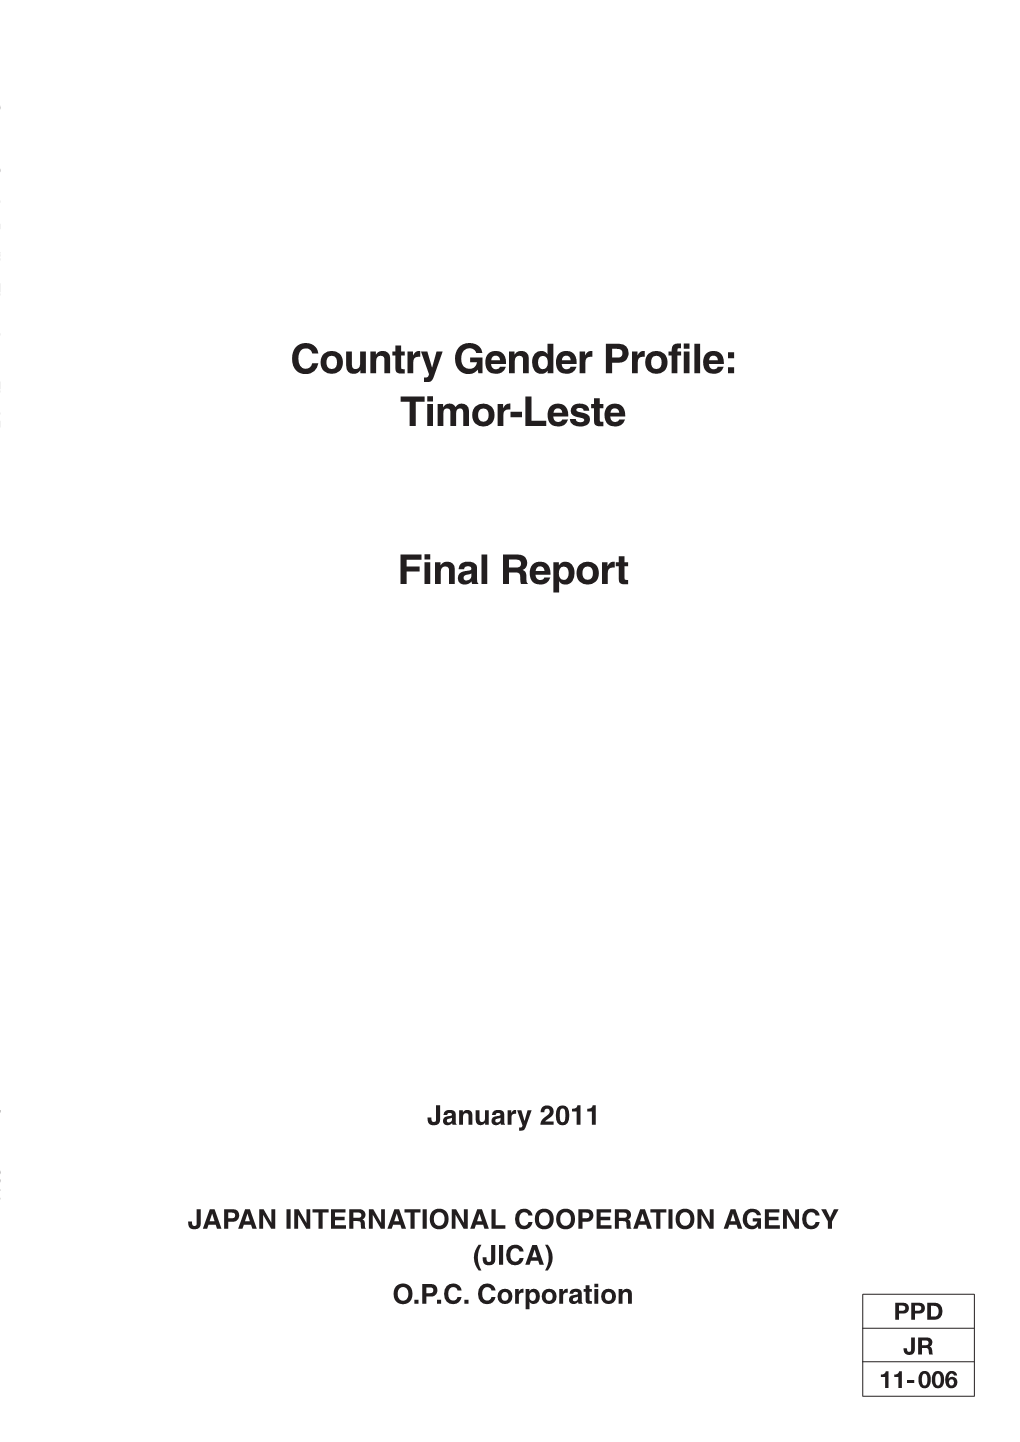 Country Gender Profile: Timor-Leste Final Report